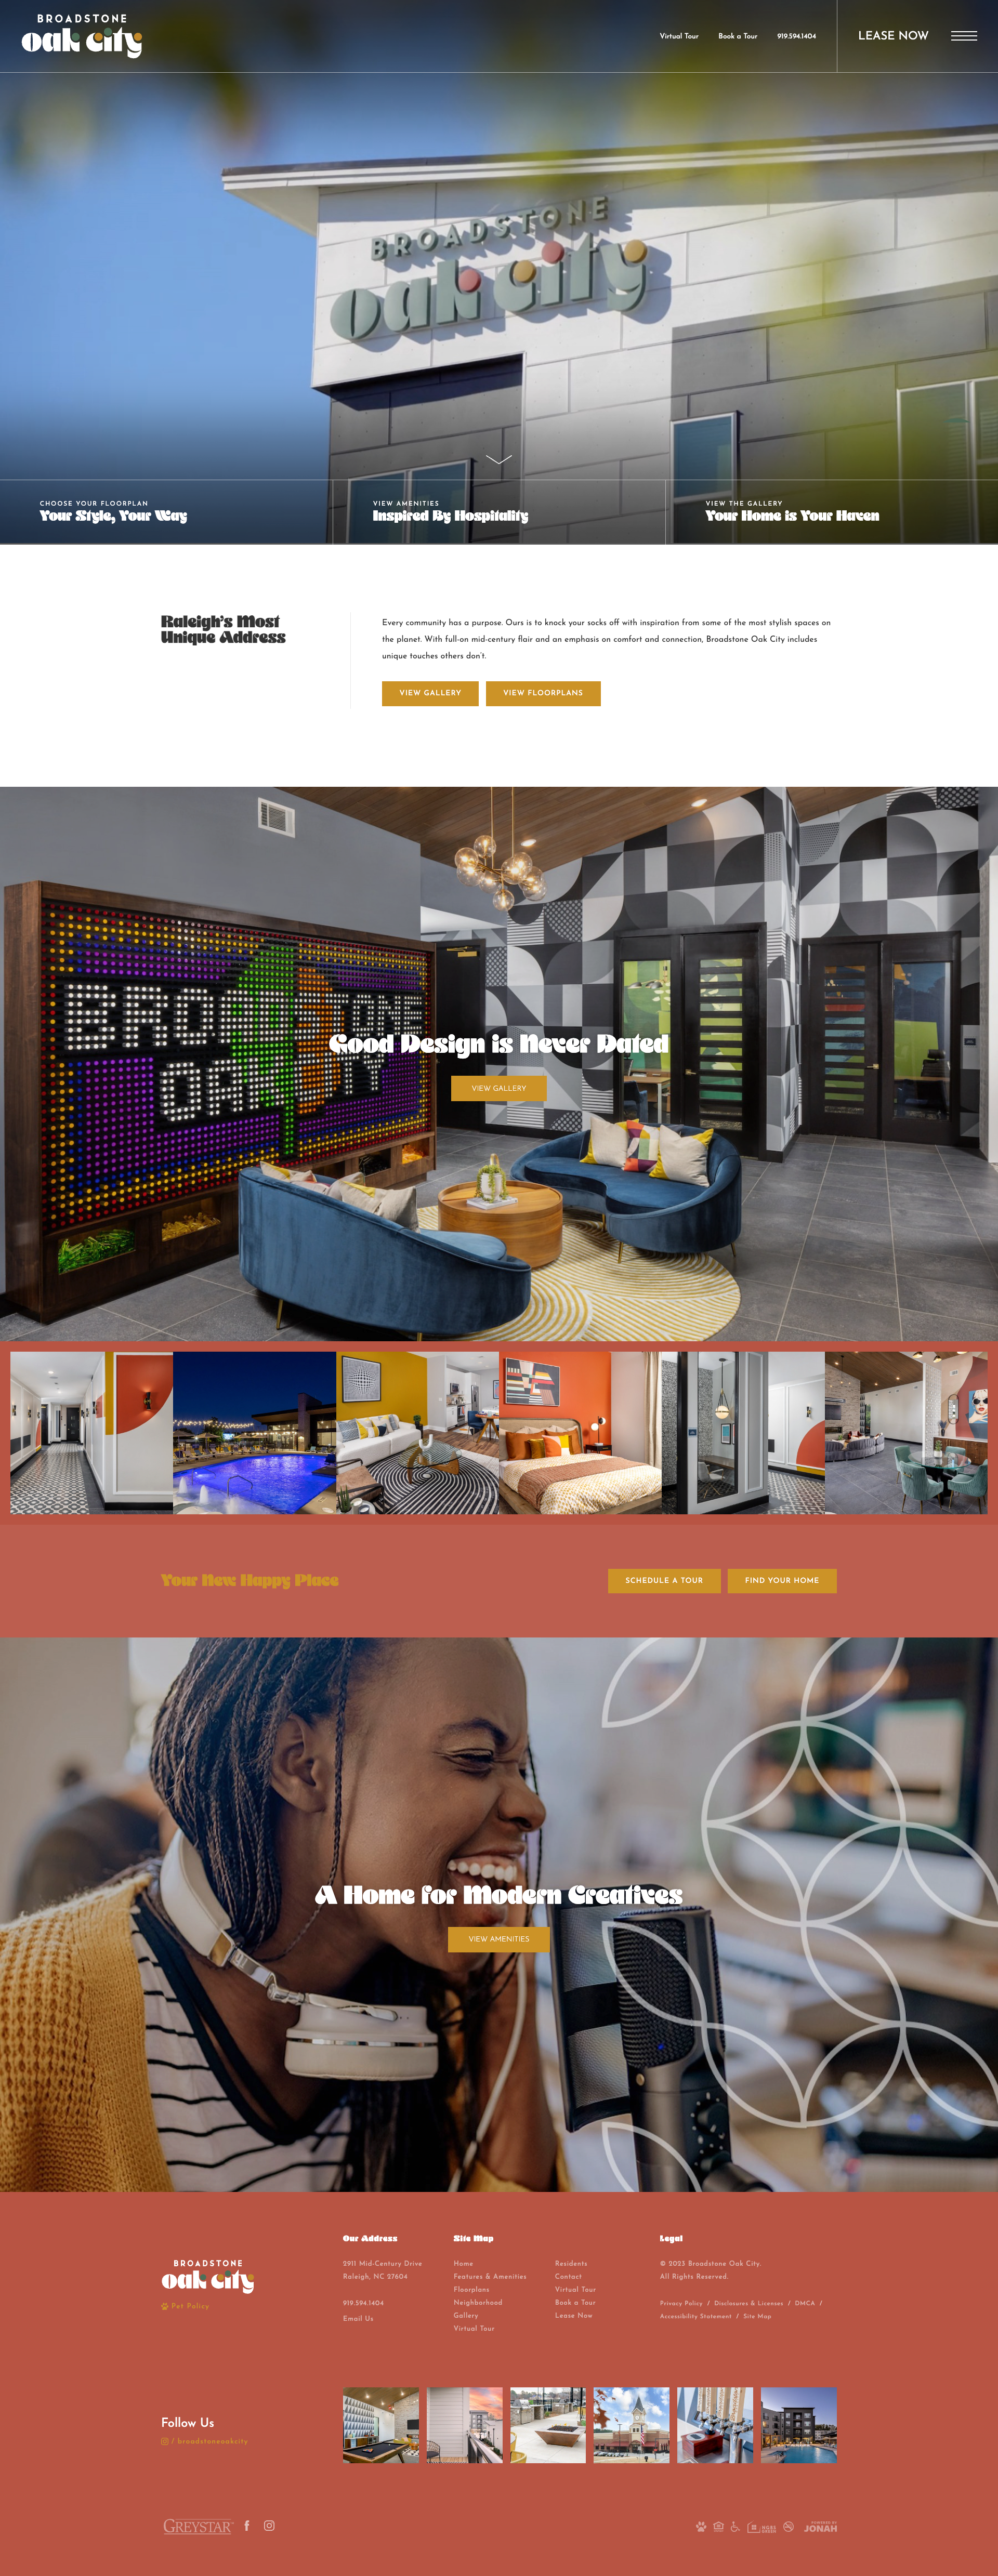 Screen grab of Broadstone web page